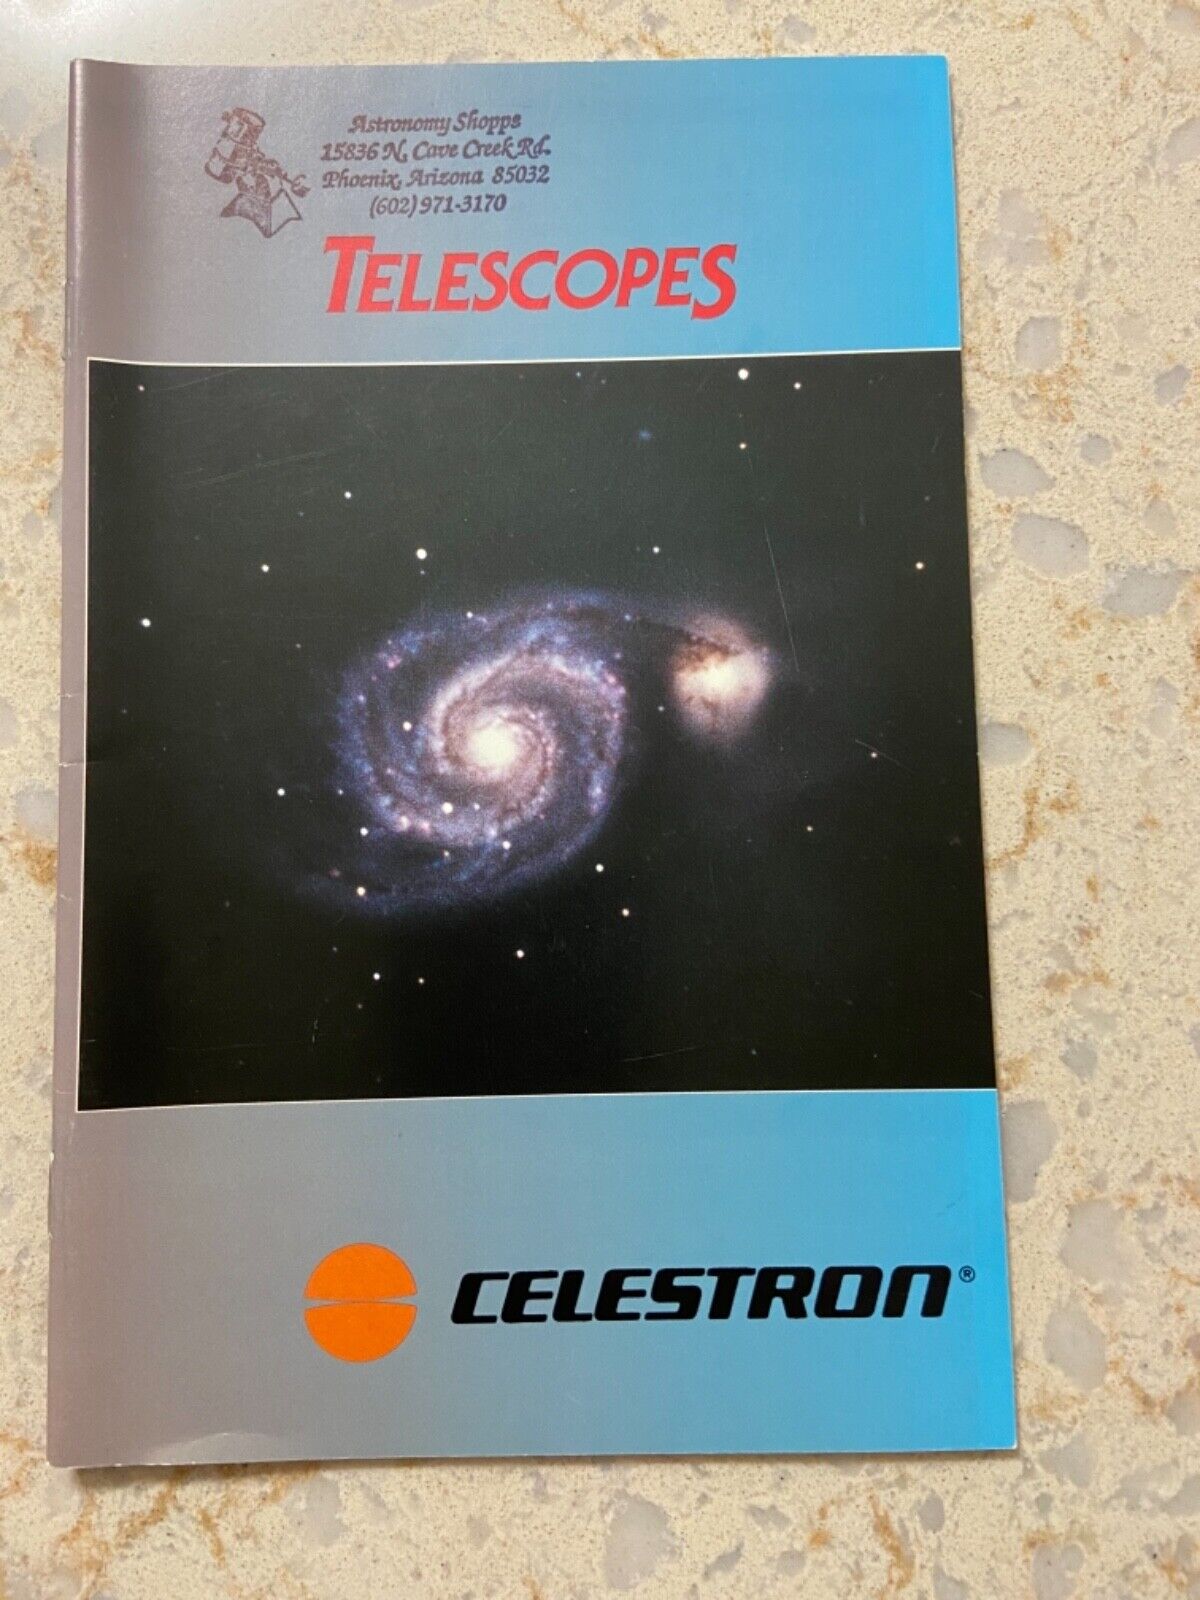 Celestron telescope catalog 1993